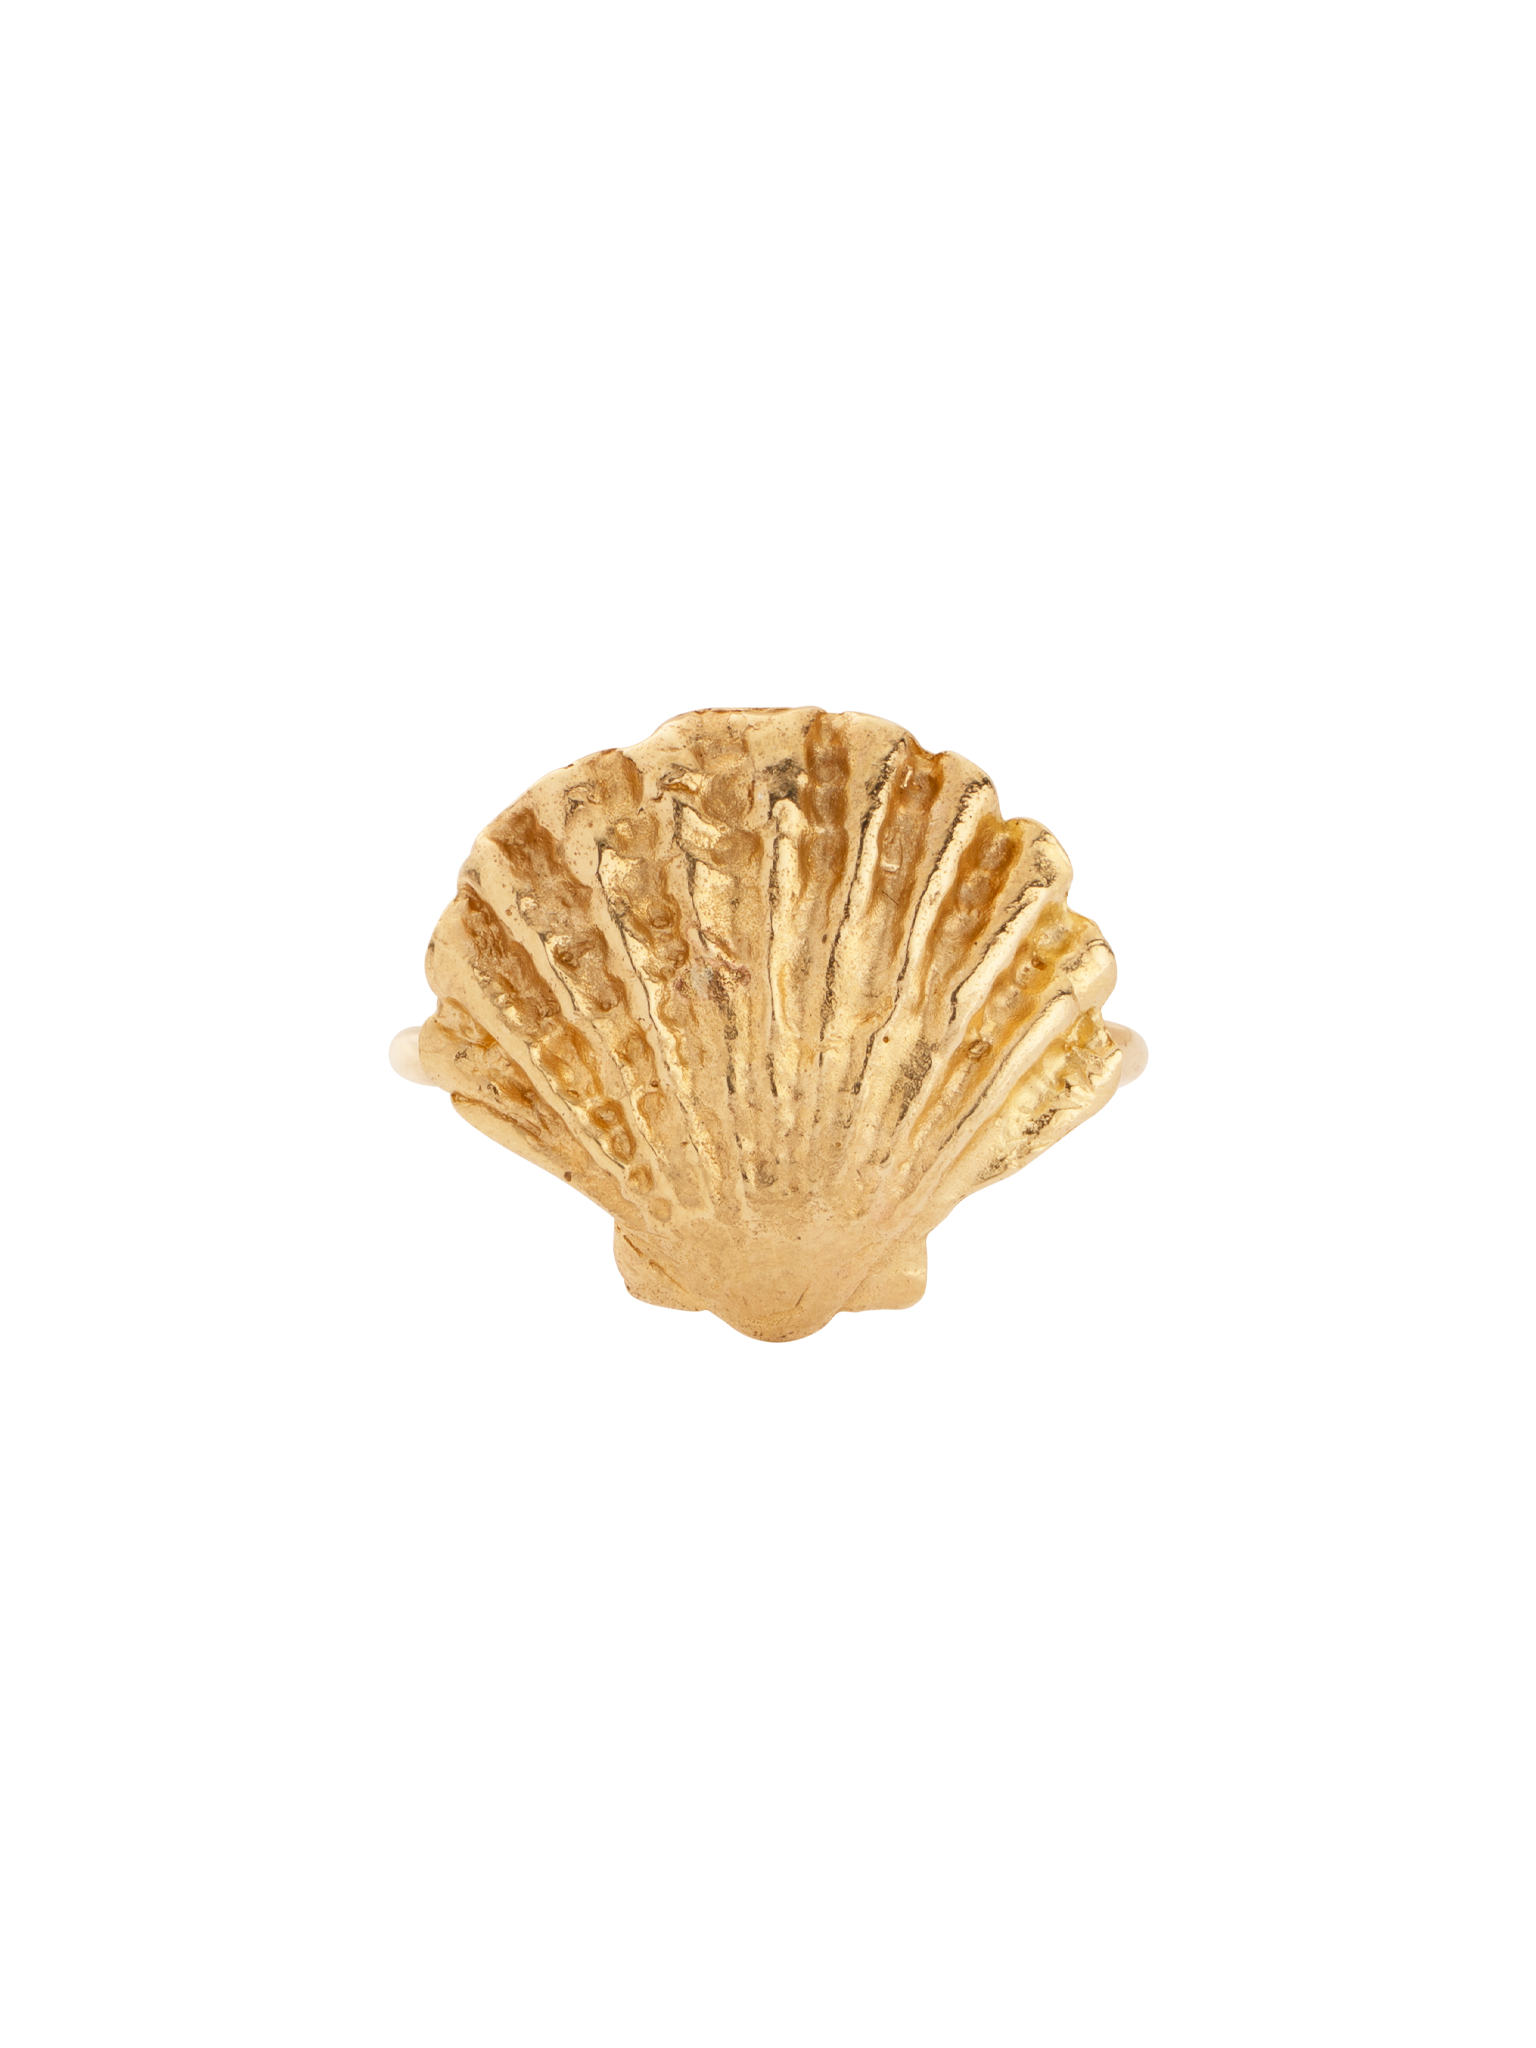 9ct gold seashell ring